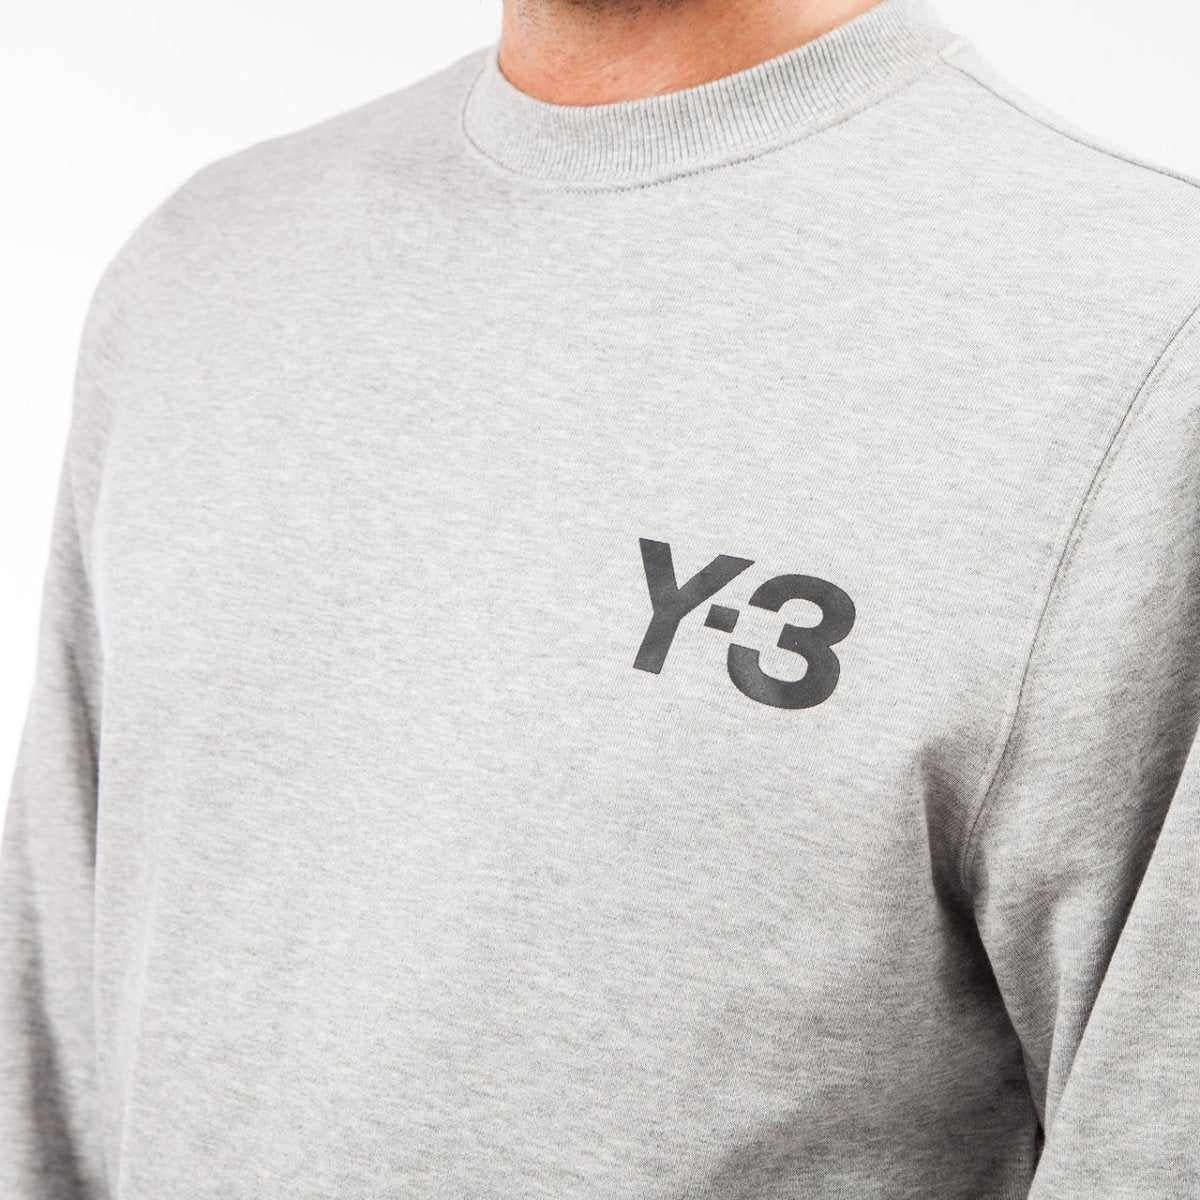 Y-3 Classic Longsleeve T-Shirt (Grau)  - Allike Store